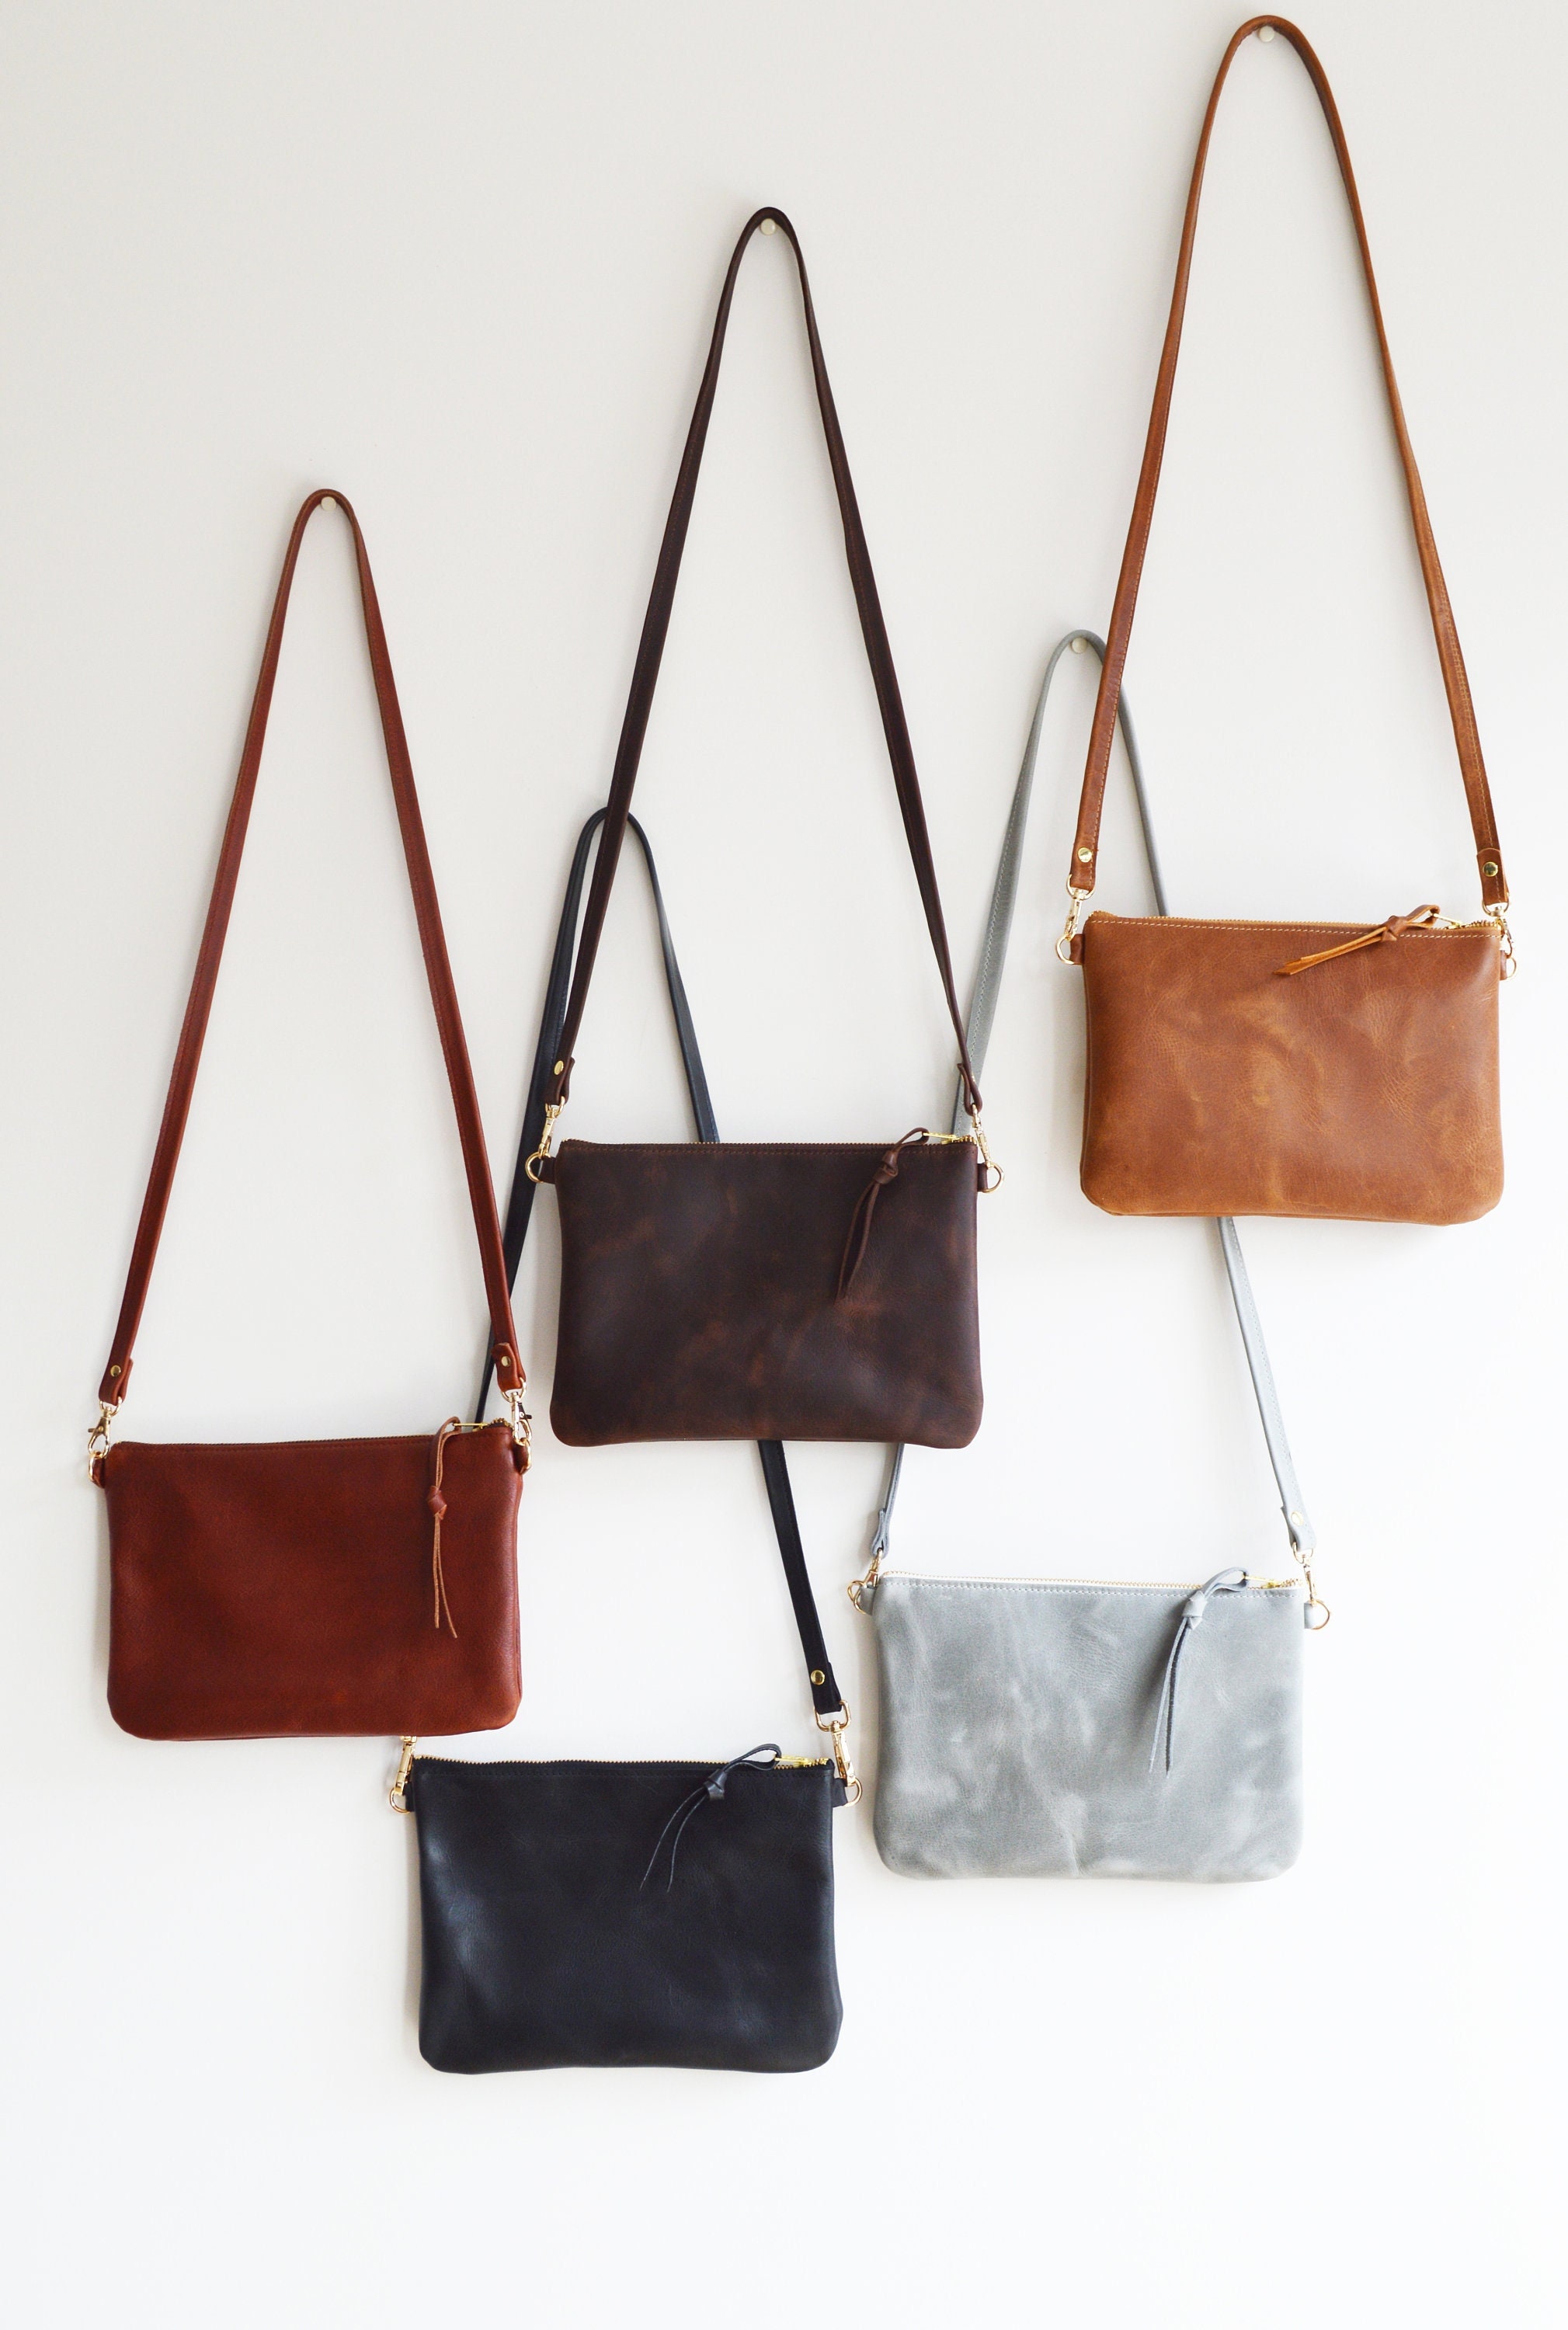 Buy Black Leather Tote Bag for Women Purse Large Work Shoulder Bag SALE  Handbag Laptop Bag Women Gift for Her Bridesmaid Mother Wife Birthday  Online in India - … | Black leather